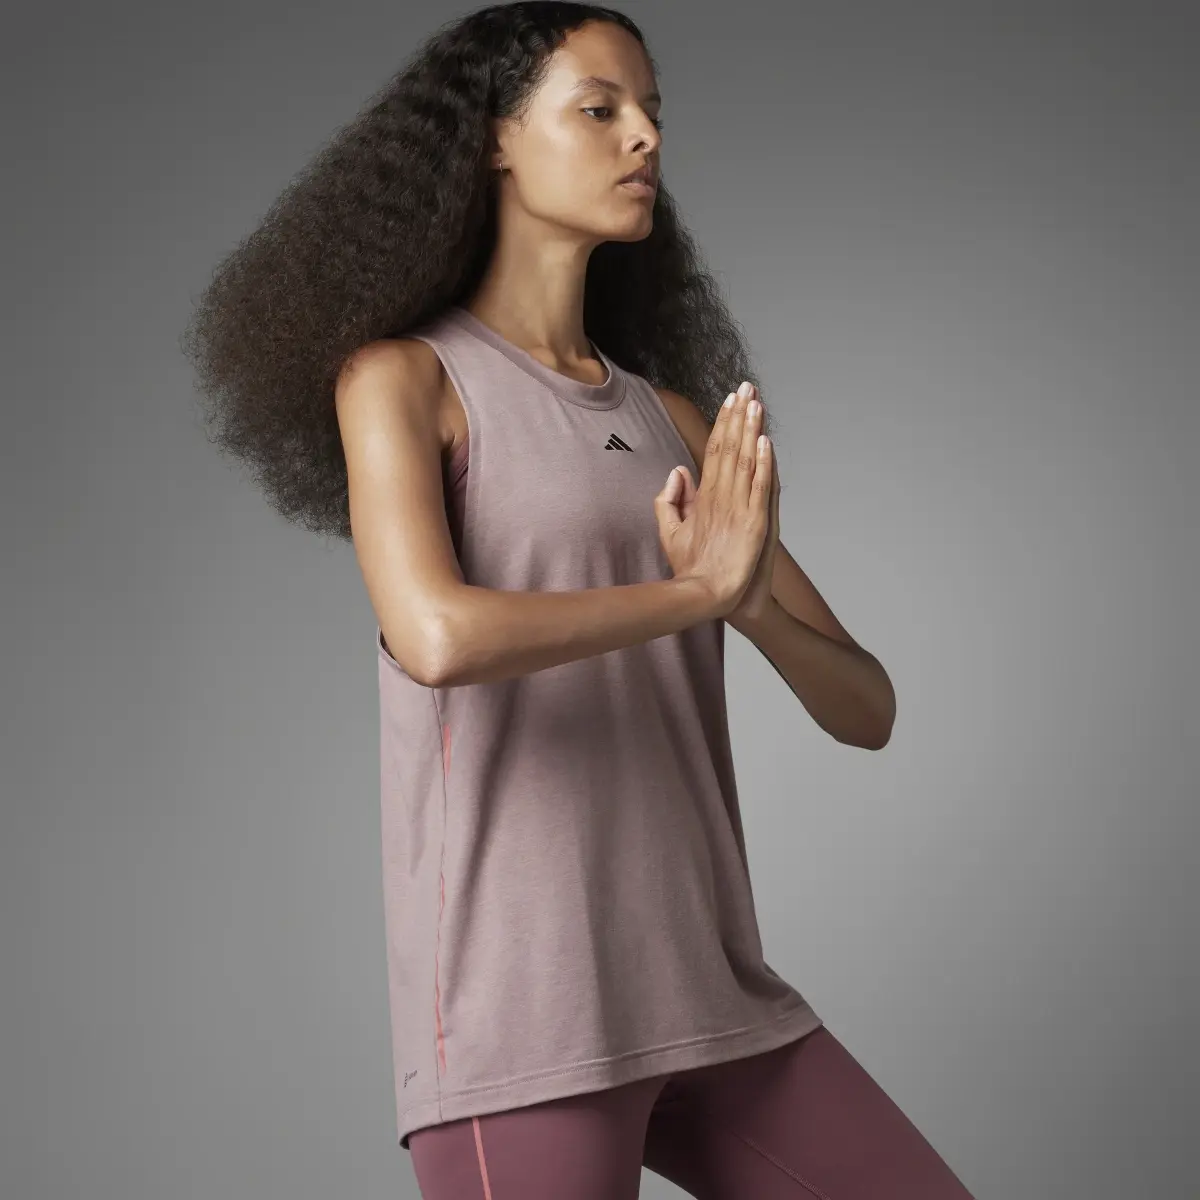 Adidas Authentic Balance Yoga Tank Top. 1